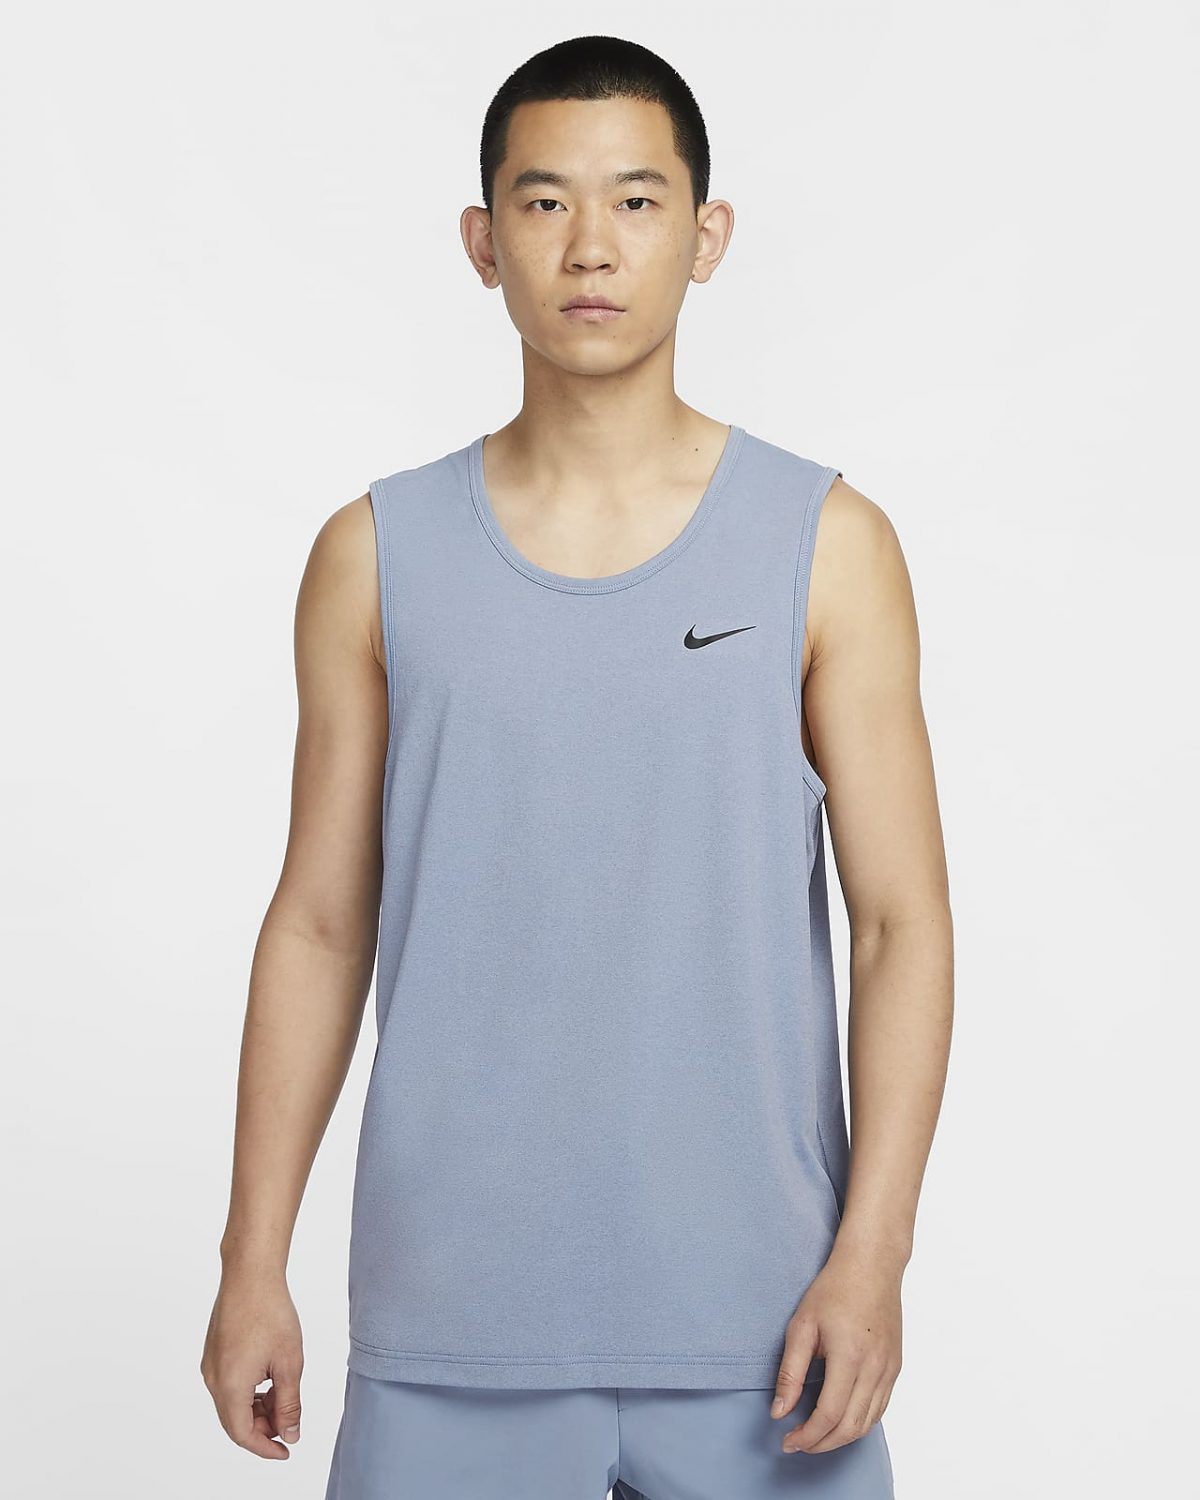 Мужская спортивная одежда Nike Dri-FIT Hyverse черная фото